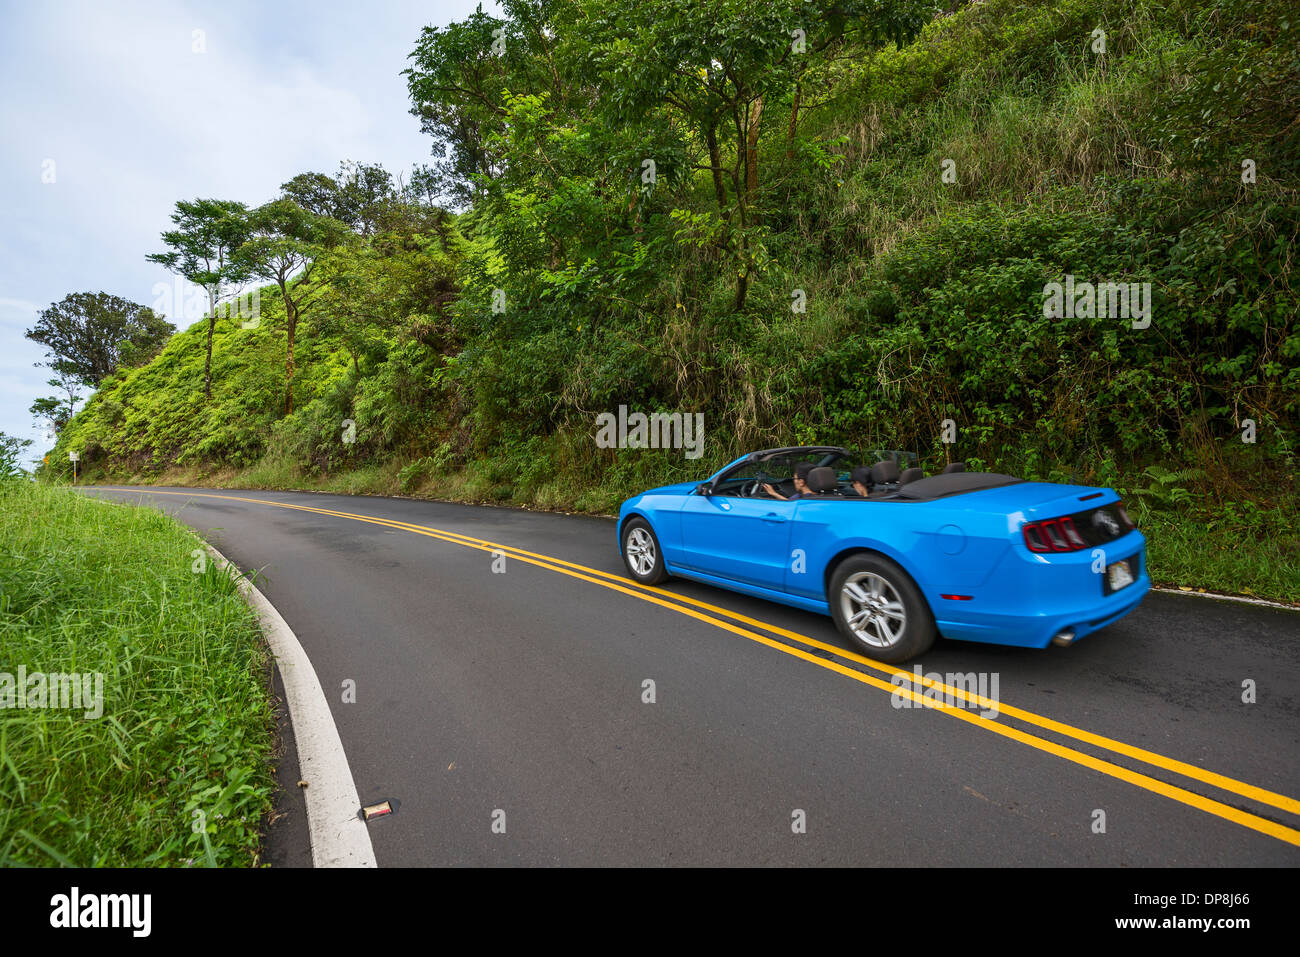 La famosa strada di Hana in Maui, Hawaii. Foto Stock